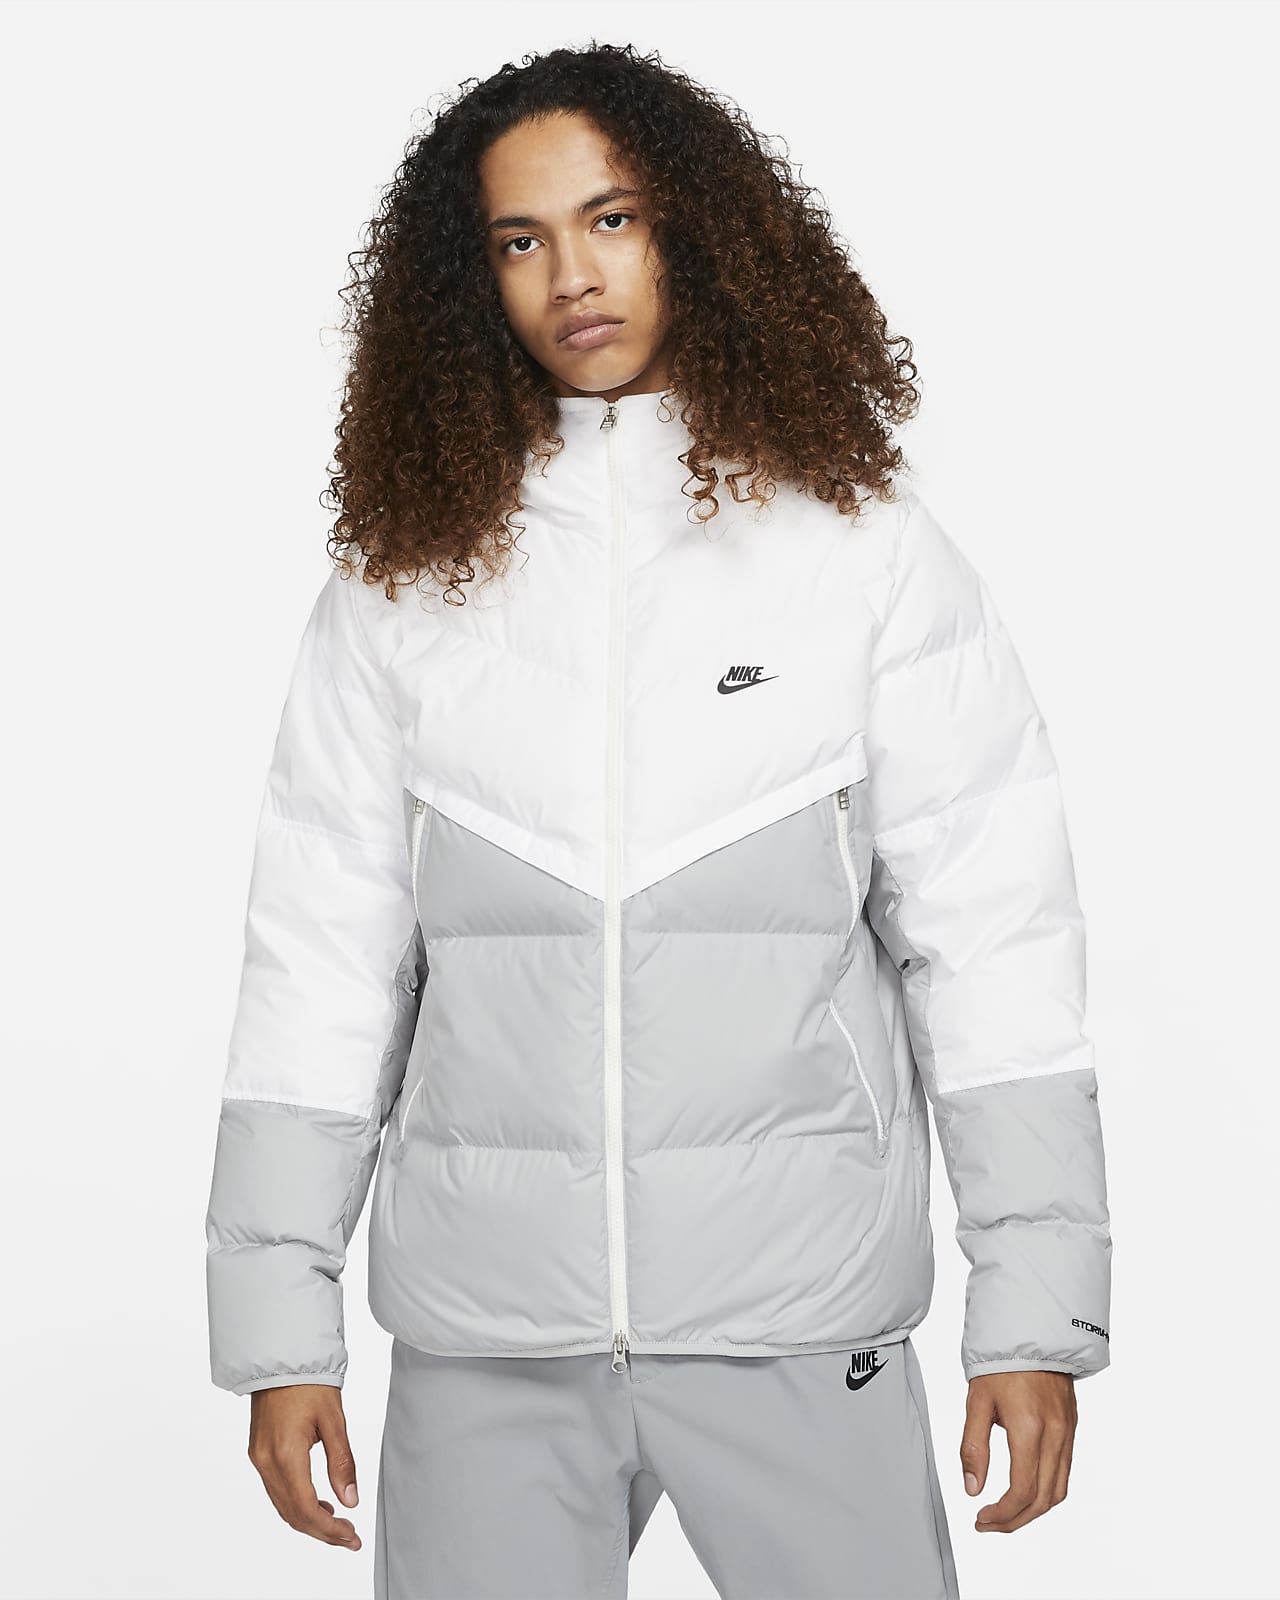 Nike Sportswear Storm-FIT Windrunner Kapüşonlu Erkek Ceketi